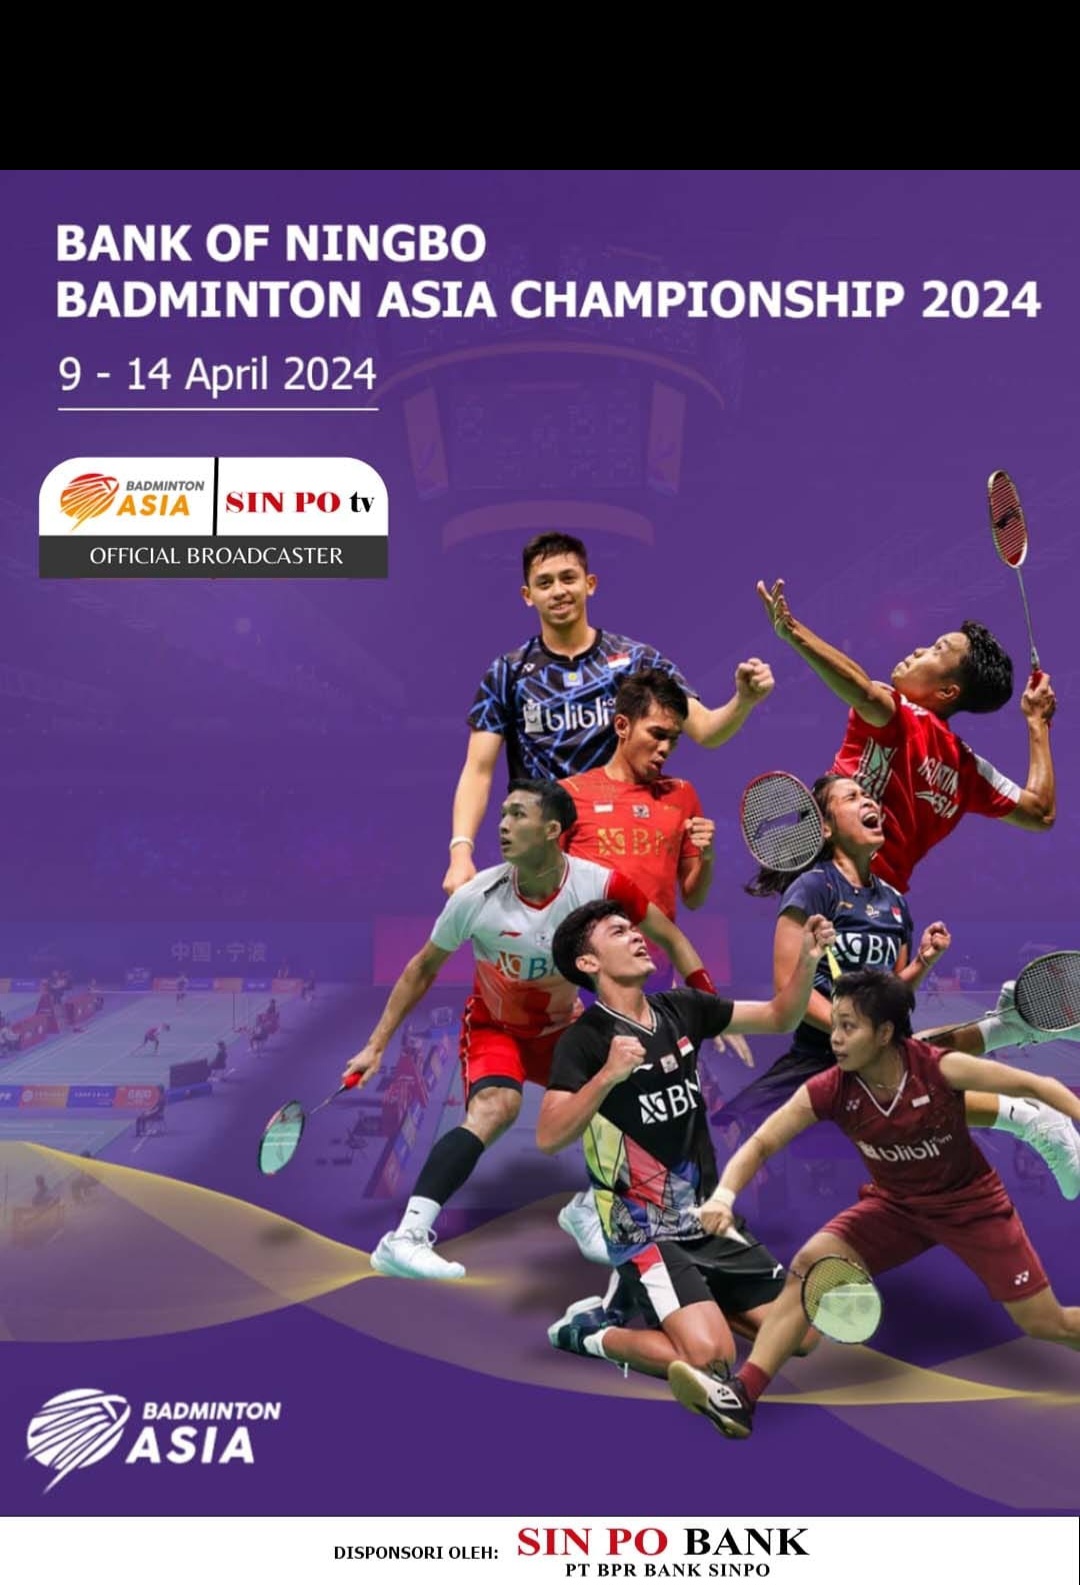 BADMINTON ASIA CHAMPIONSHIPS 2024